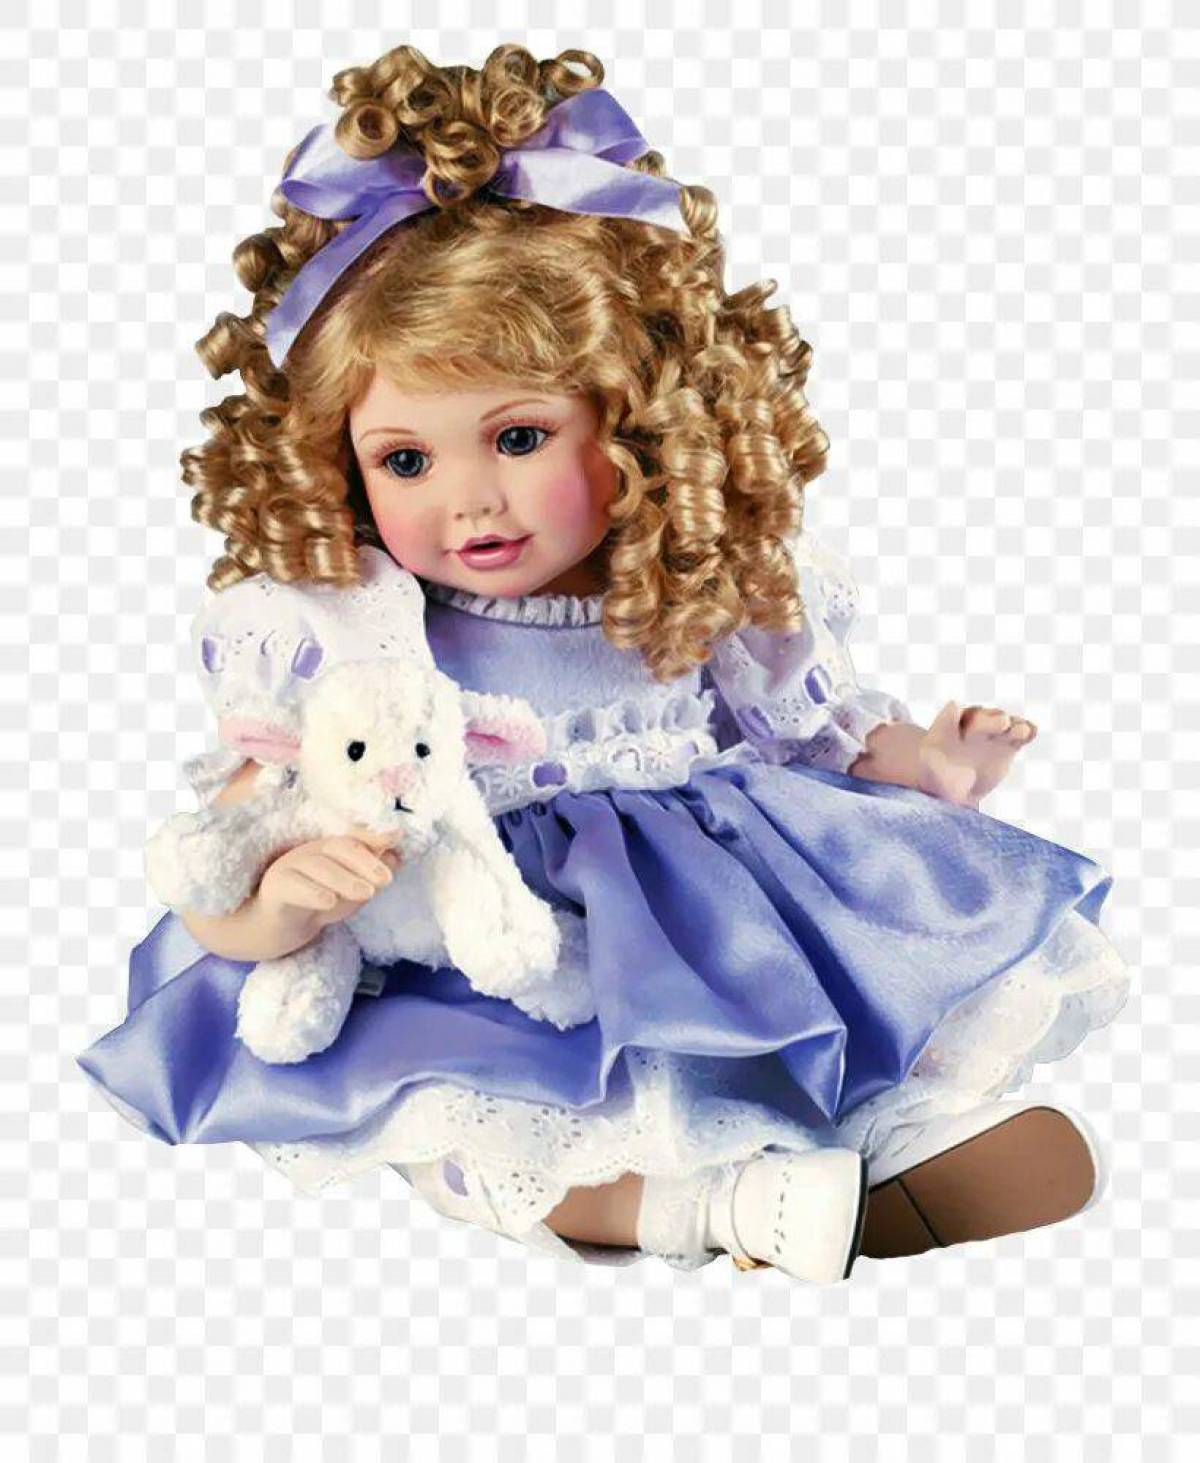 Doll картинка. Куклы Мари Осмонд. Куклы порцелан Доллс. Кукла фарфоровая. Красивые игрушки для детей.